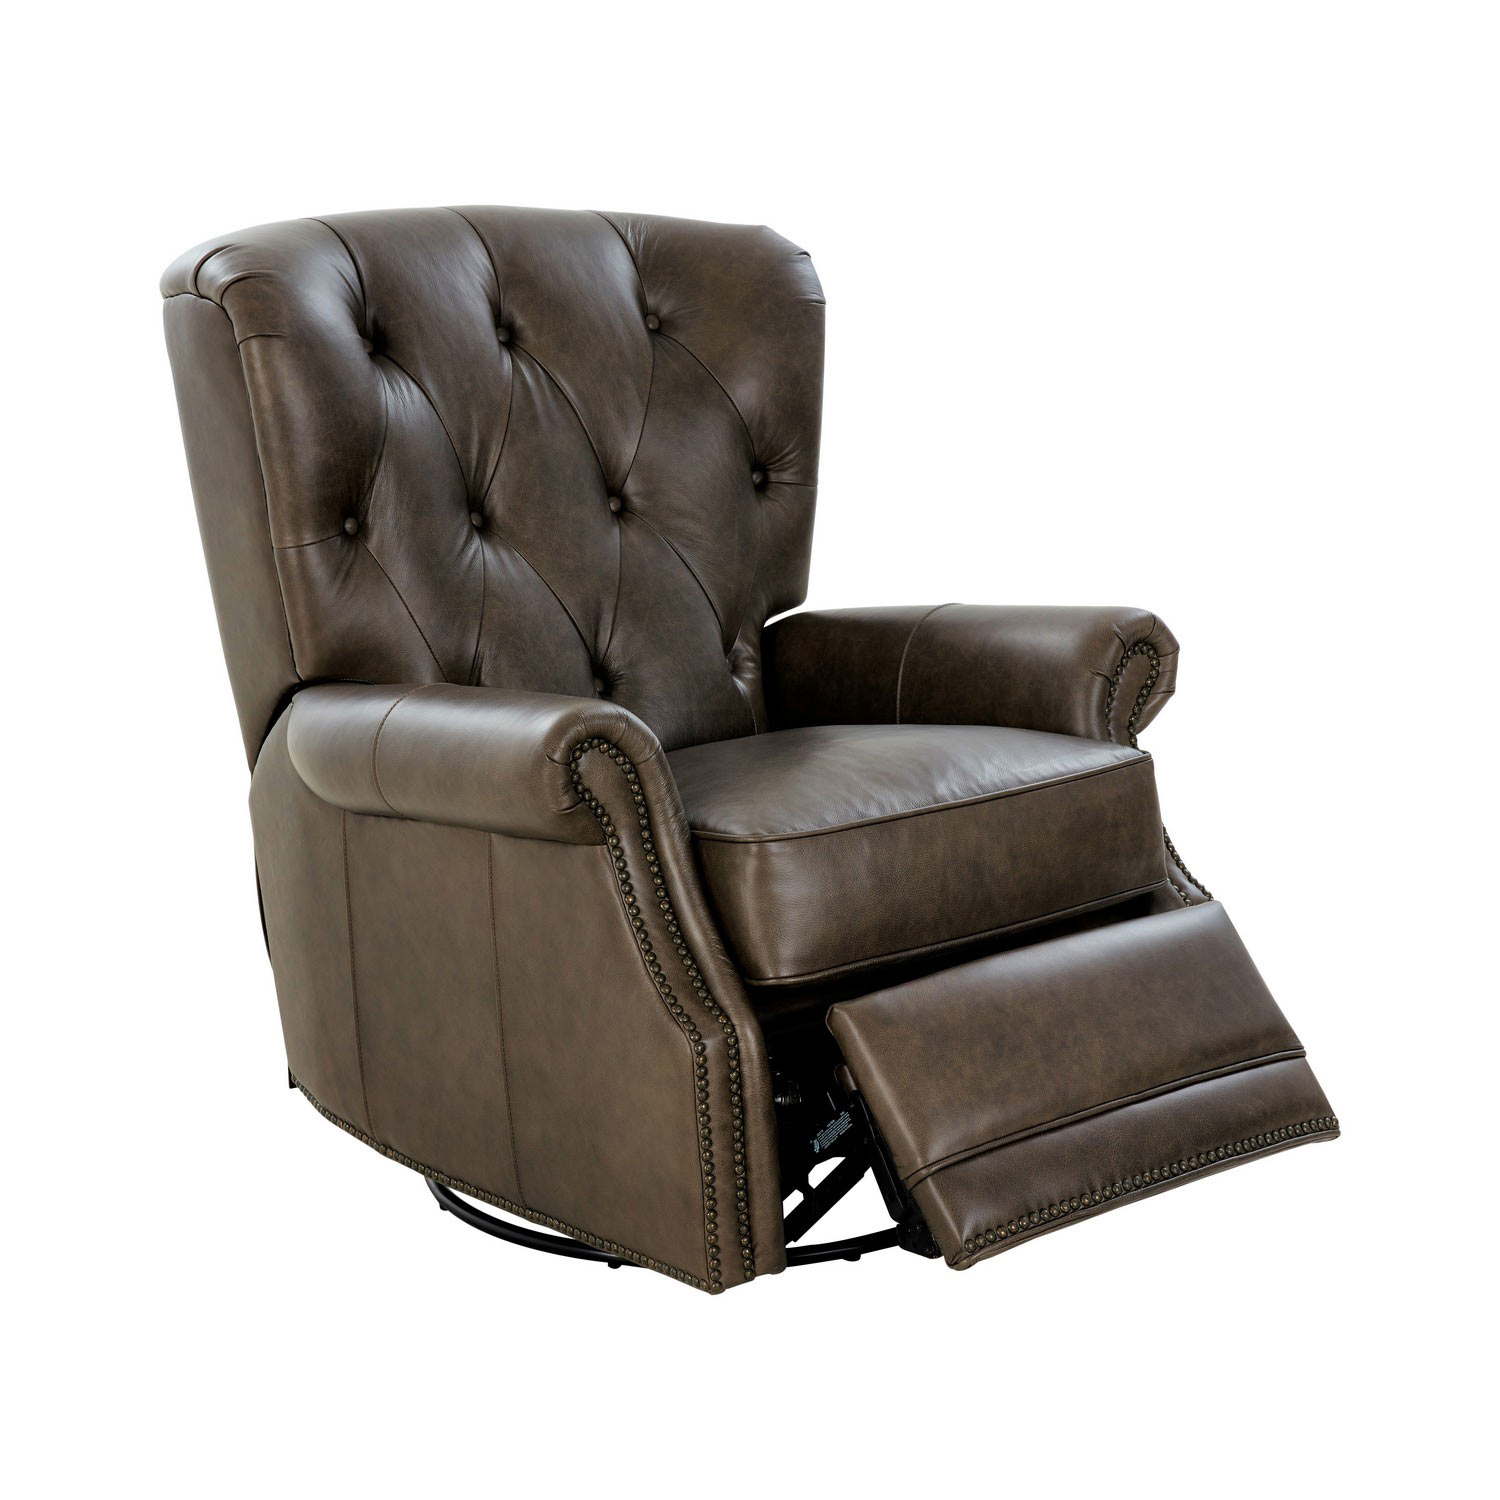 Barcalounger Heritage Power Swivel Glider Recliner Chair - Bennington Fudge/All Leather